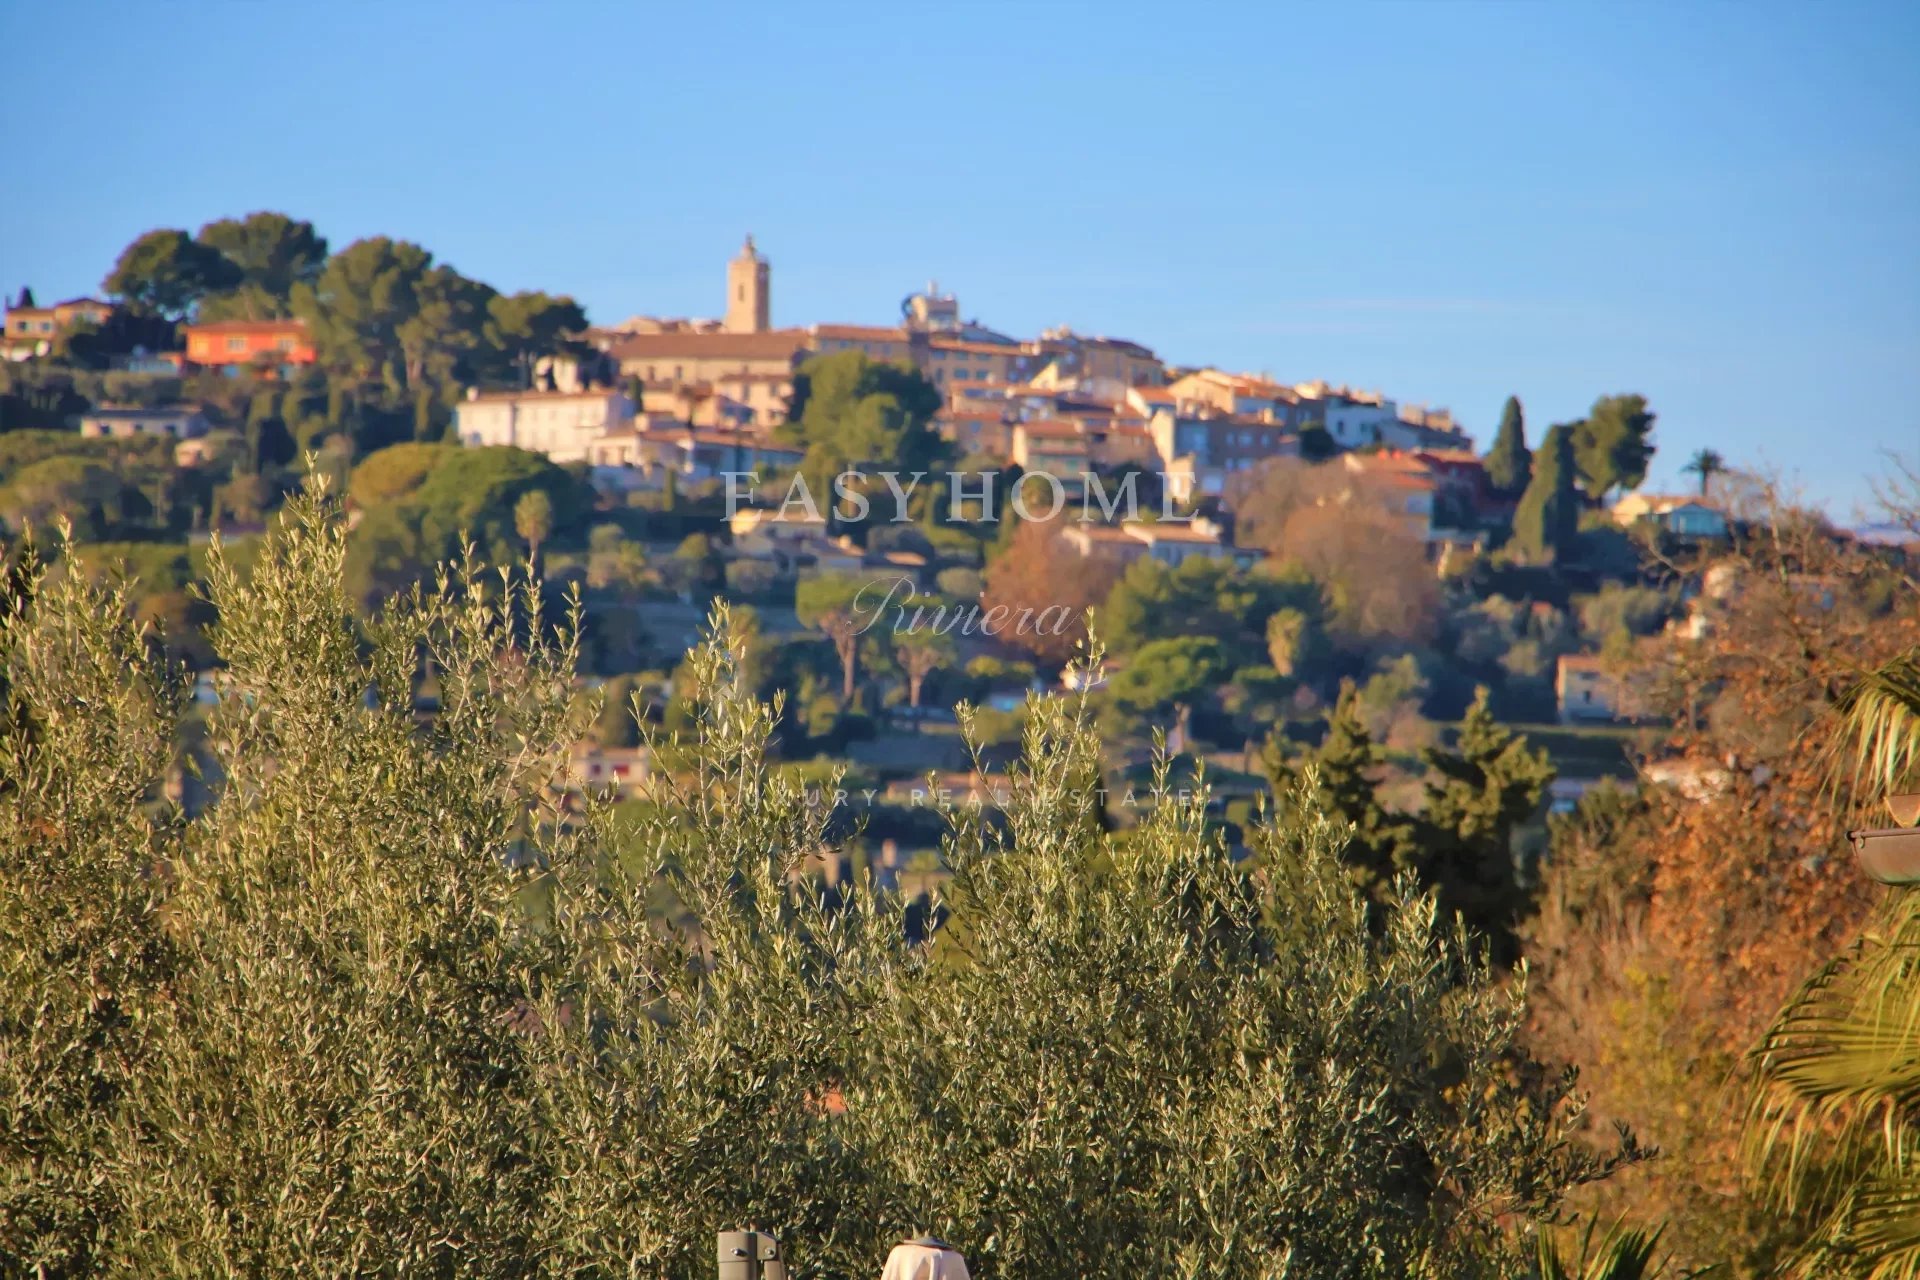 Purchase / Sale villa Mougins with a village view